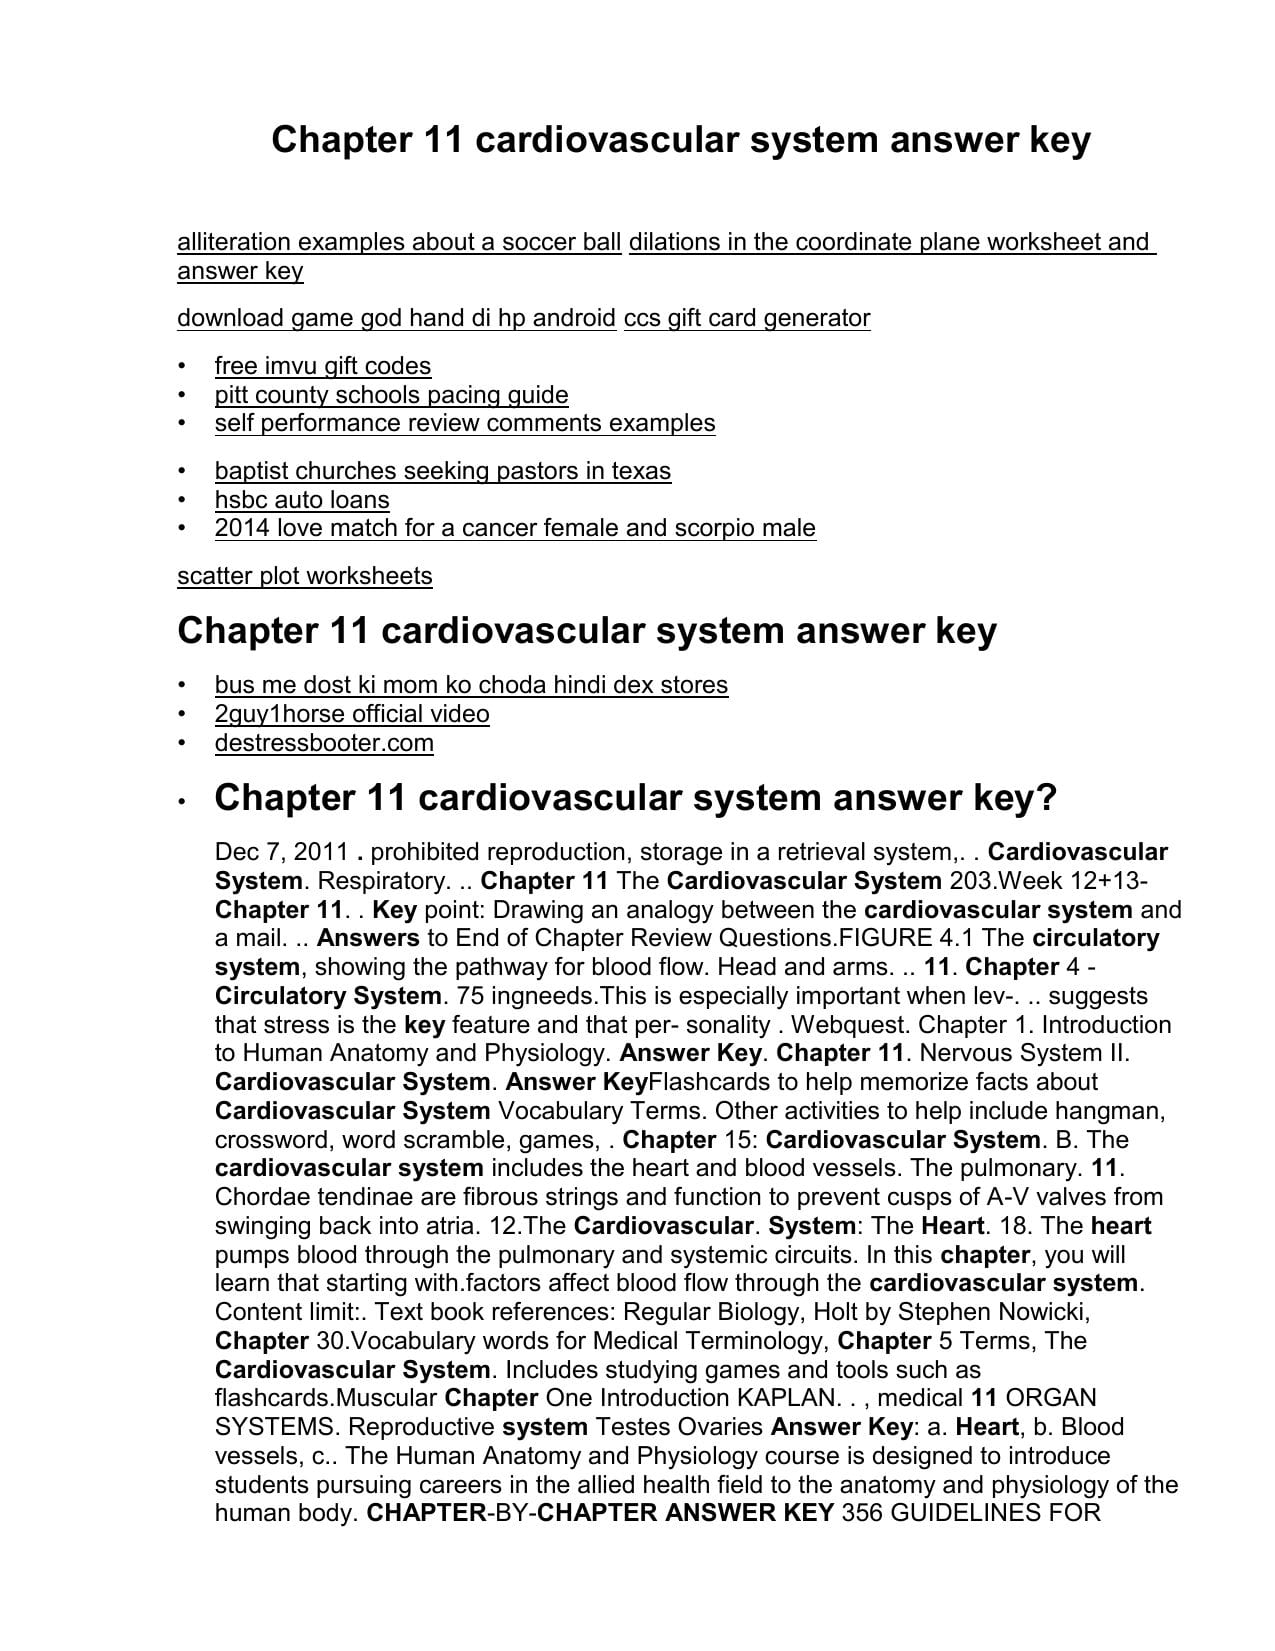 Chapter 11 Cardiovascular System Answer Key Throughout Cardiovascular System Worksheet Answers